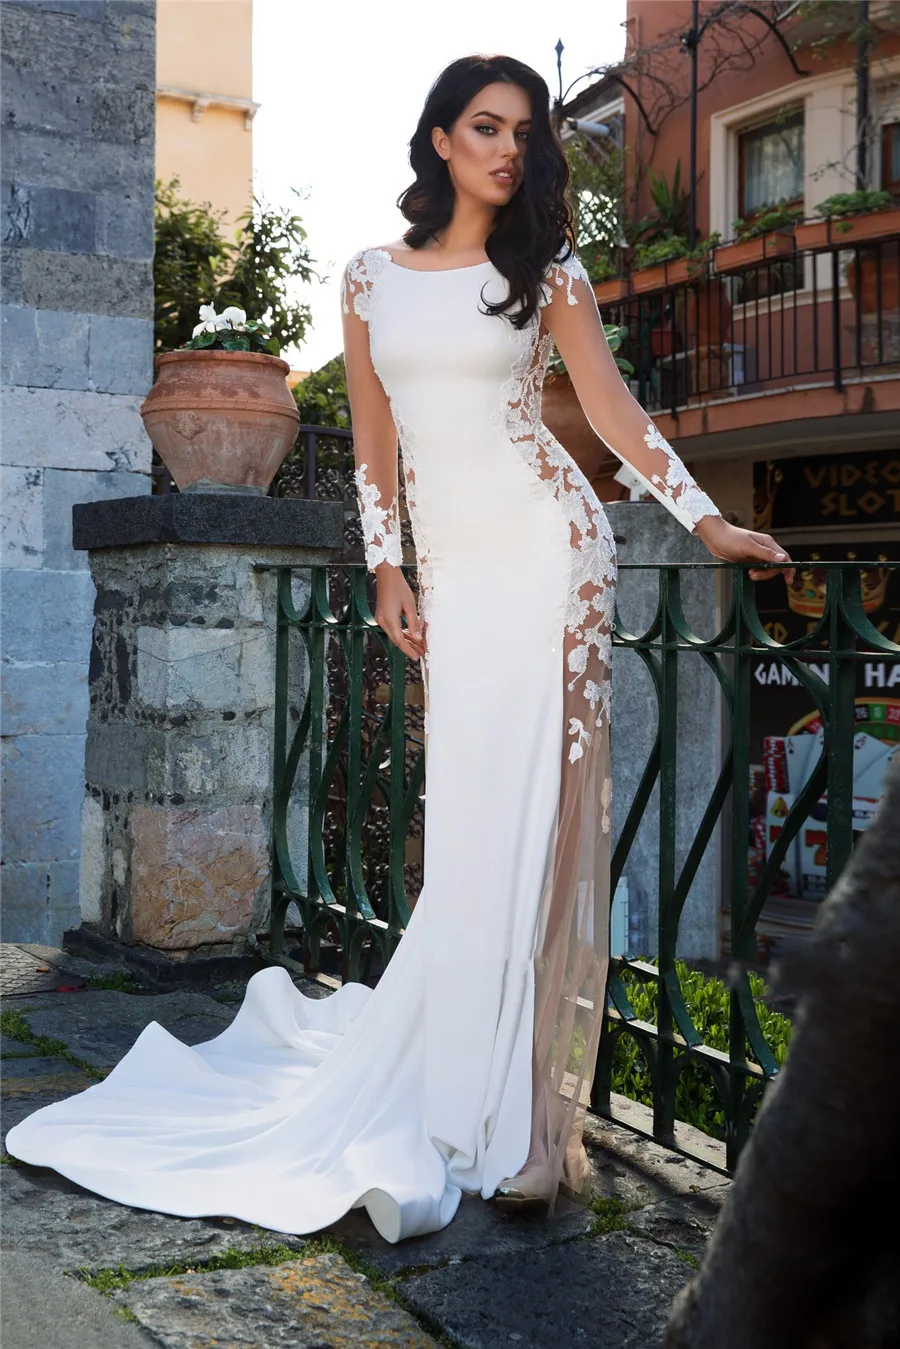 

Satin Wedding Dress Bateau Neckline See-through Cutout Side Sheath With Lace Appliques Long Sleeves Bridal Gown Vestido De Novia